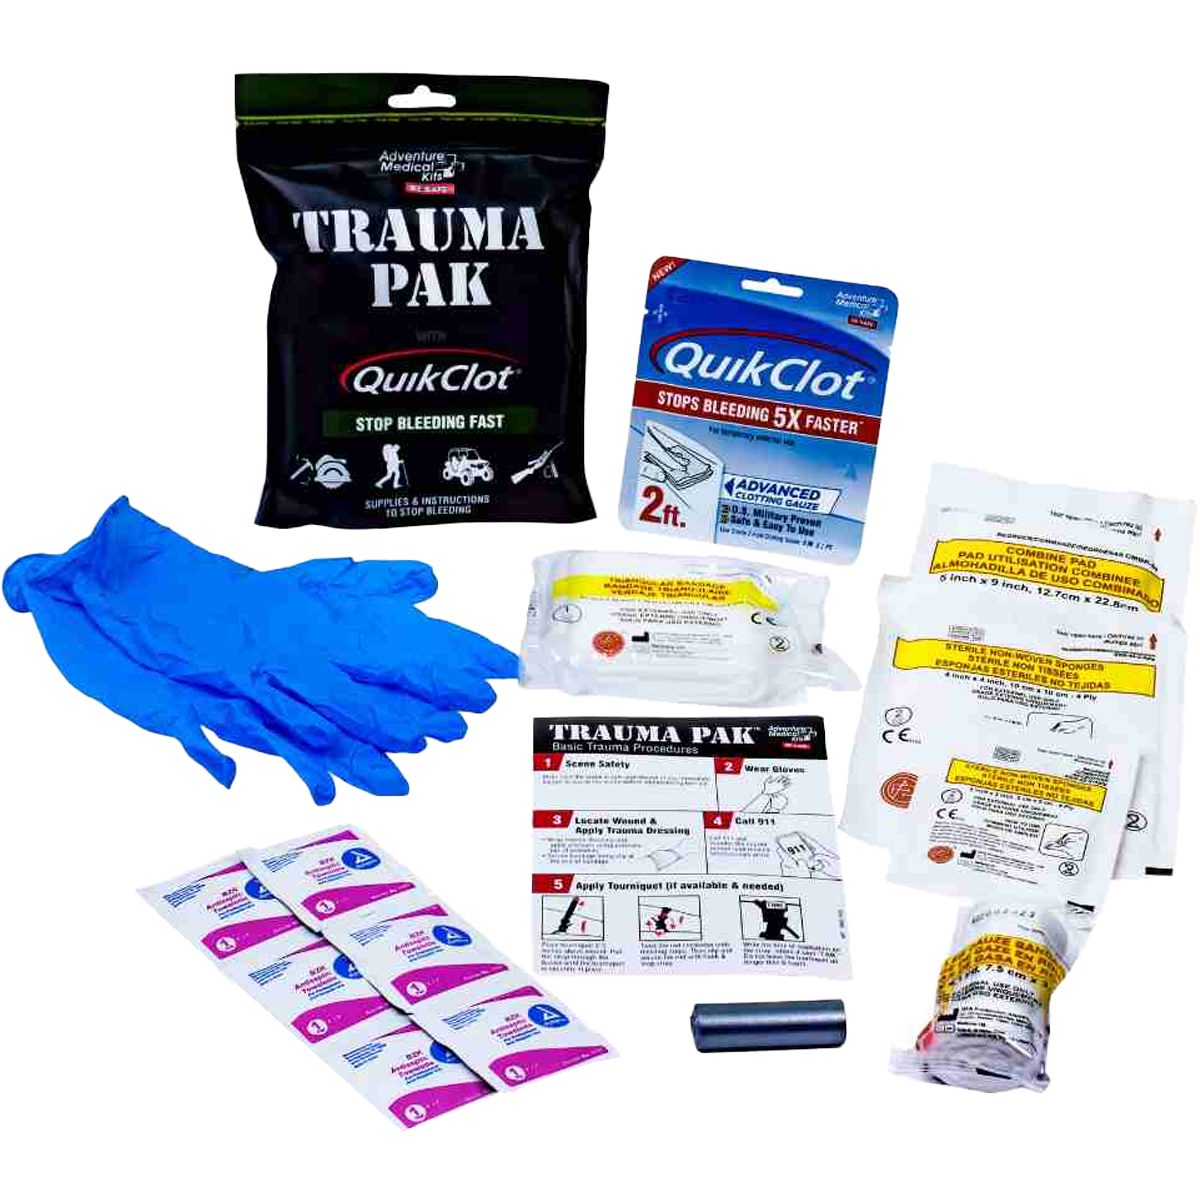 Trauma Pak First Aid Kit with QuikClot alternate view